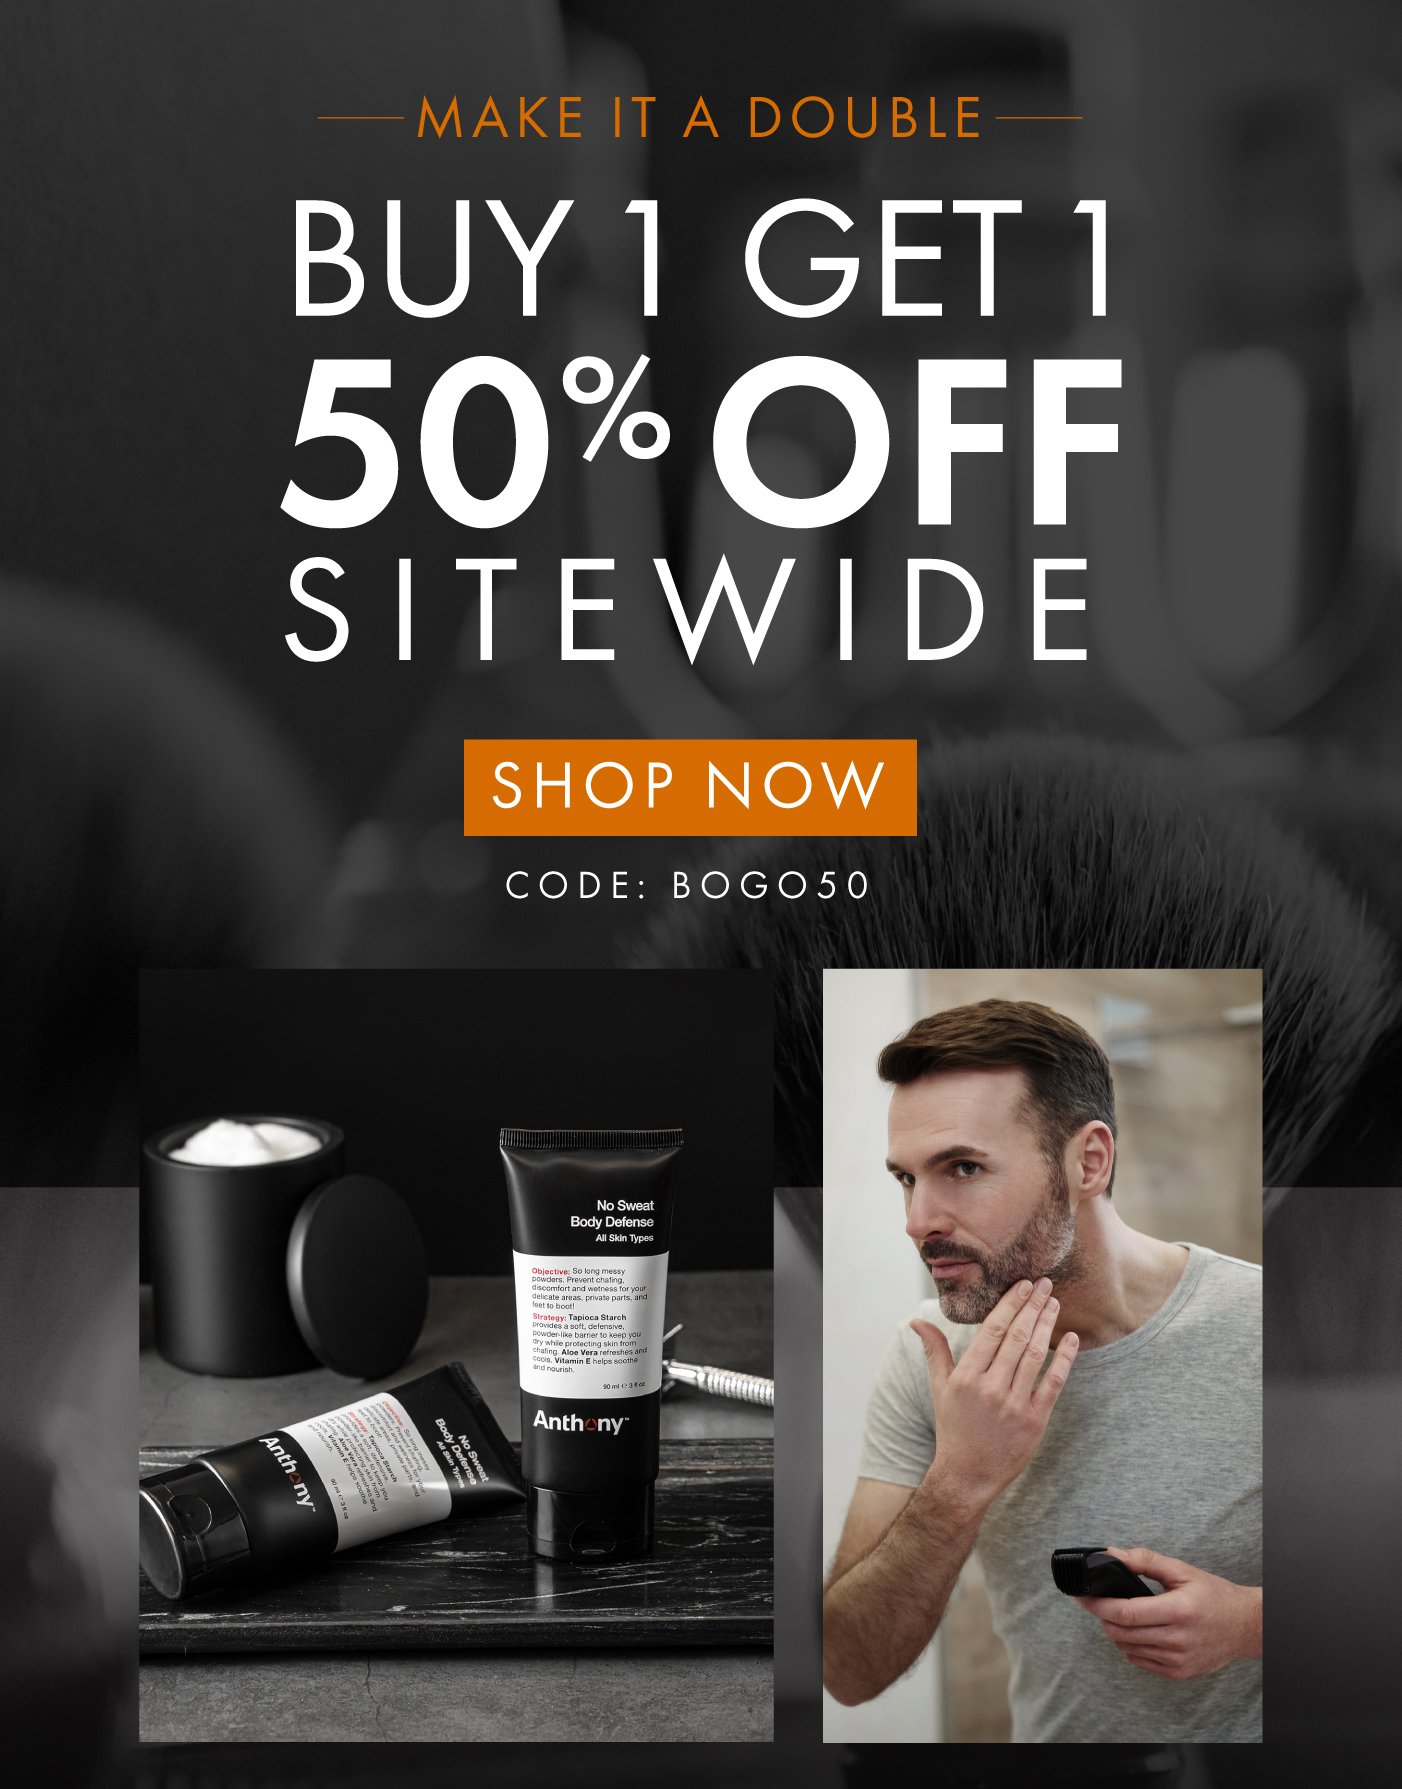 Ends Tonight, Buy 1 Get 1 50% off Sitewide use code: BOGO50